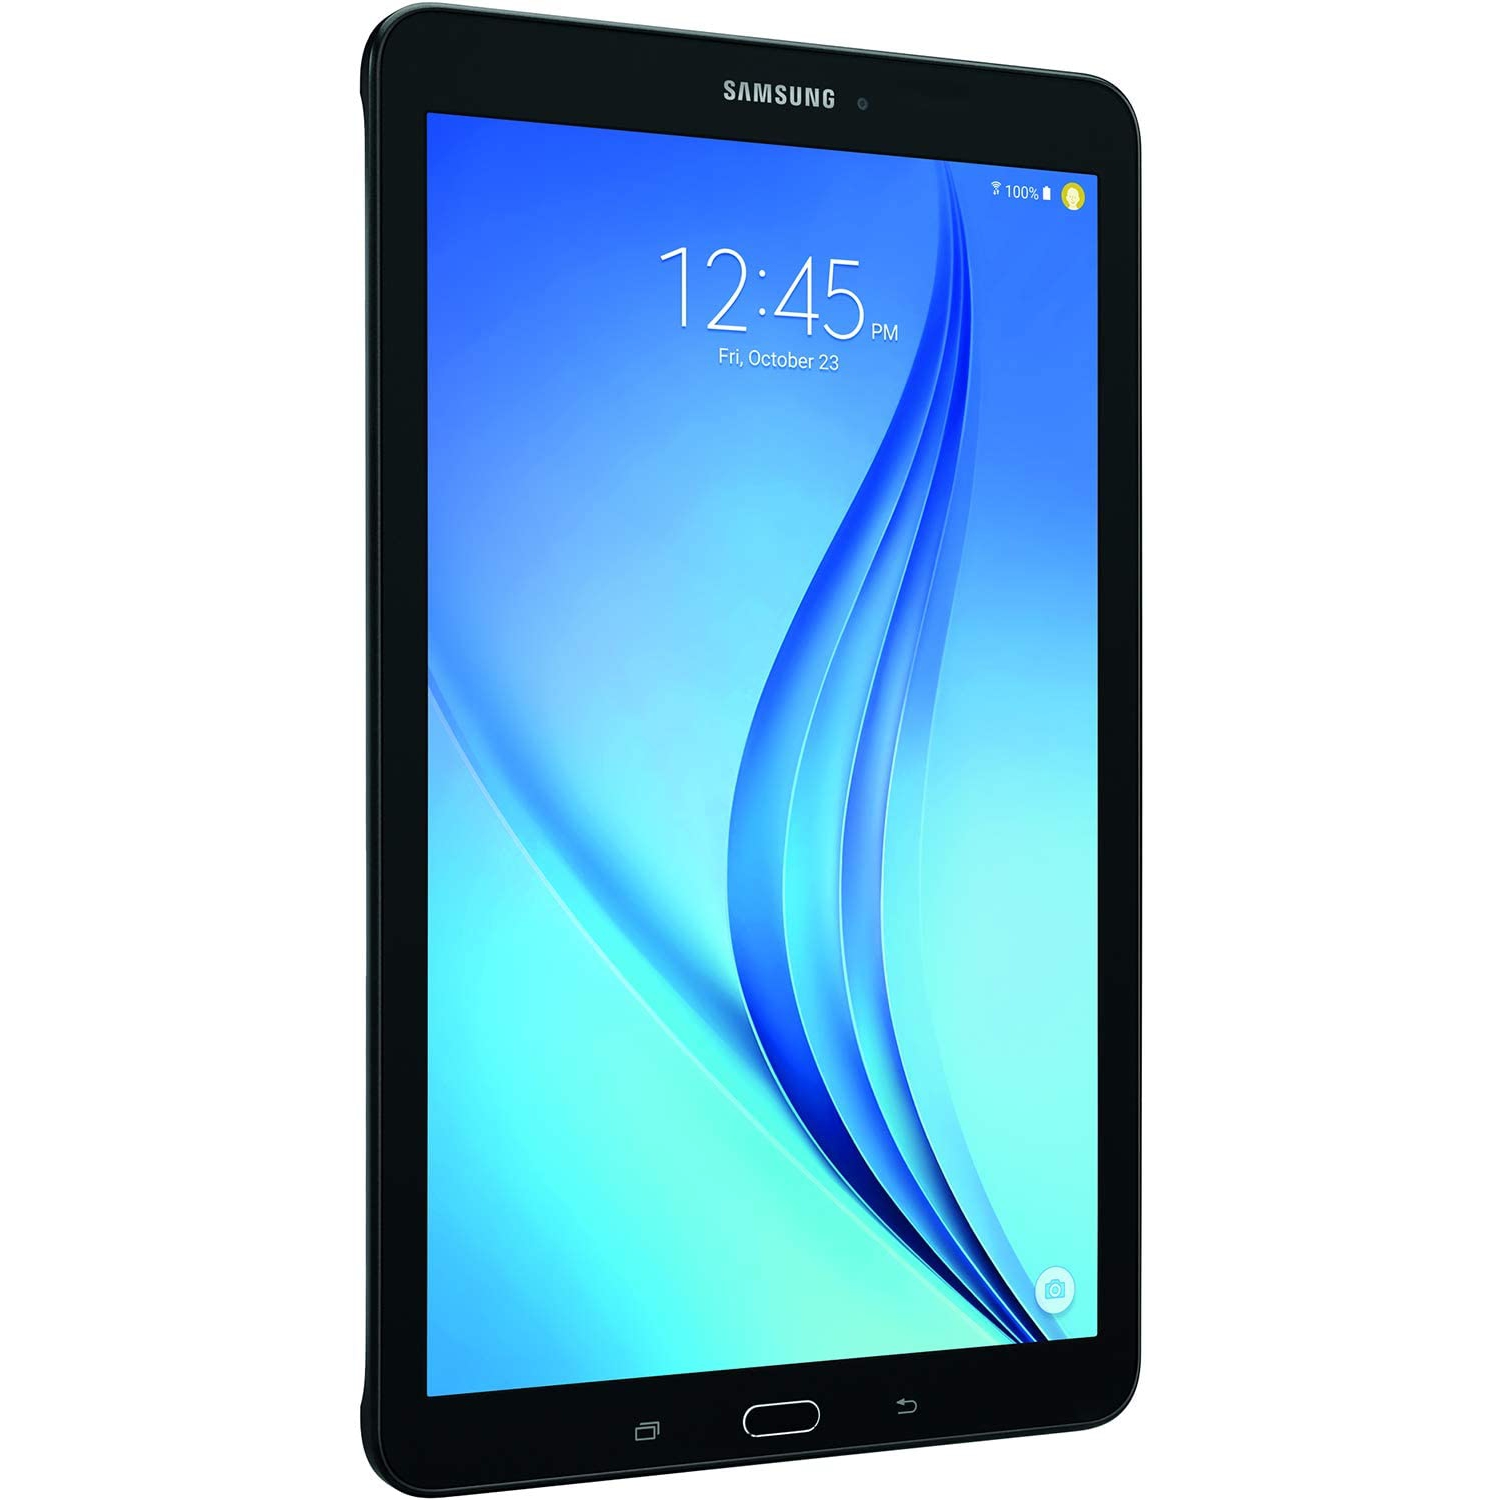 Samsung Galaxy Tab E (SM-T560NU) 9.6 - Inch Tablet 16/1.5GB - (WiFi Only) - Black - International Model - Certified Refurbished